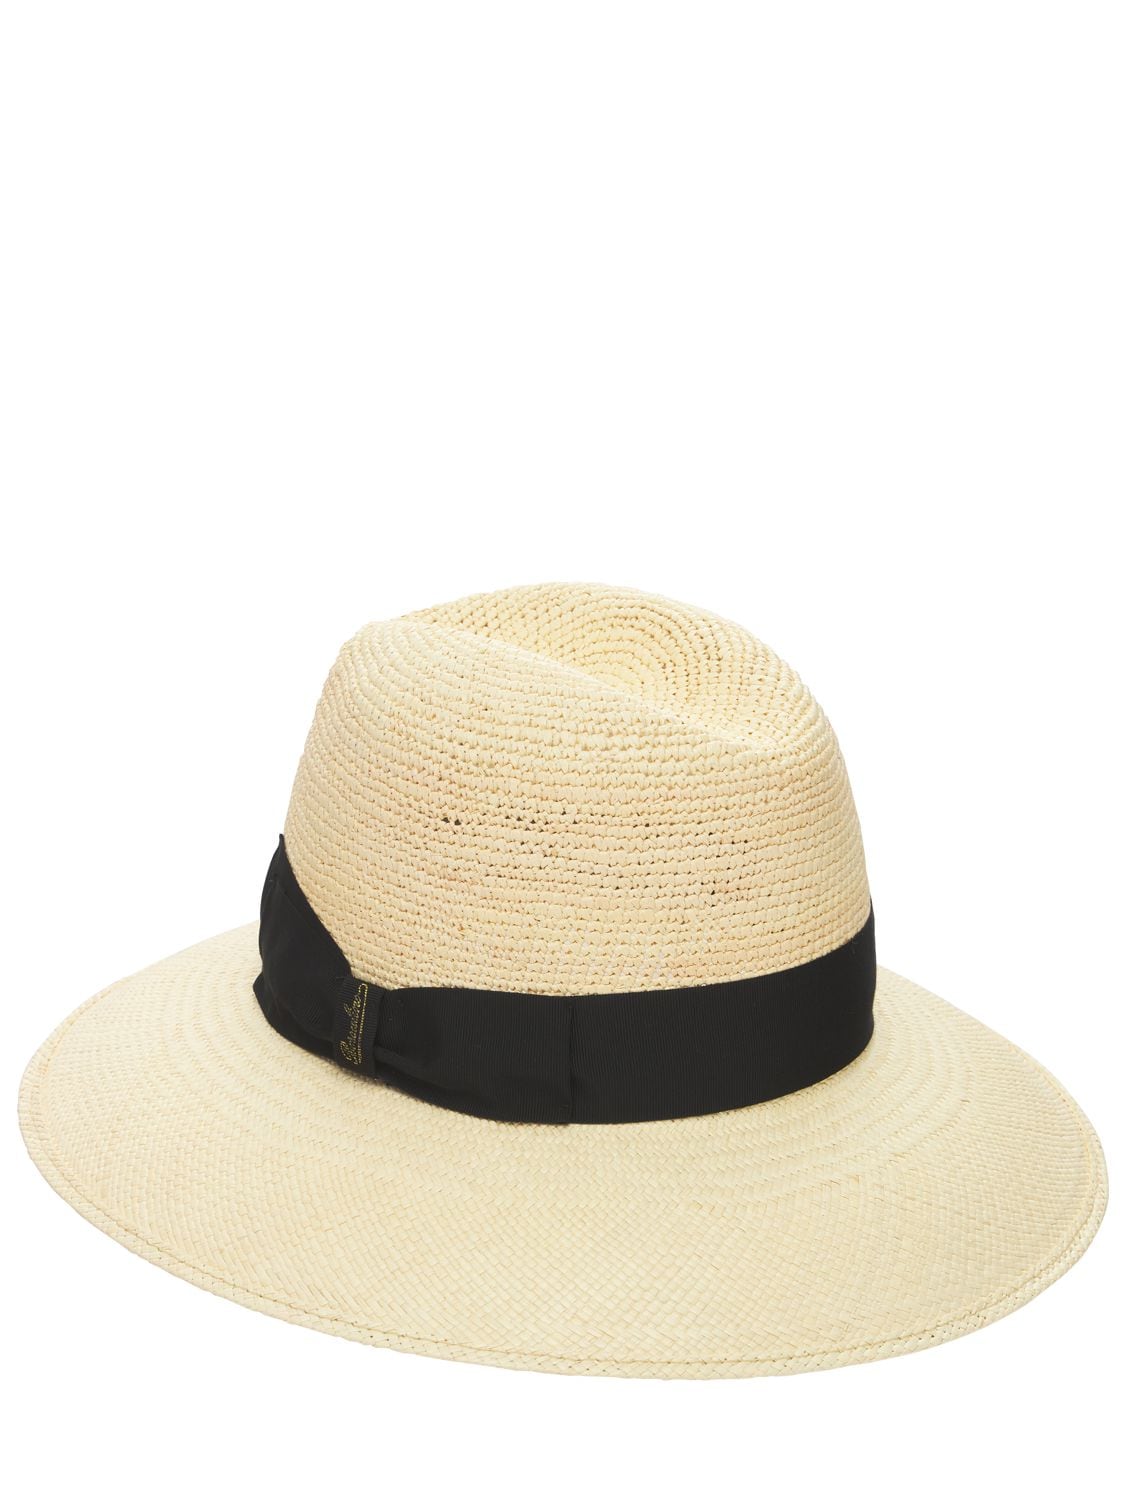 BORSALINO "claudette" Semi-crochet Panama Hat